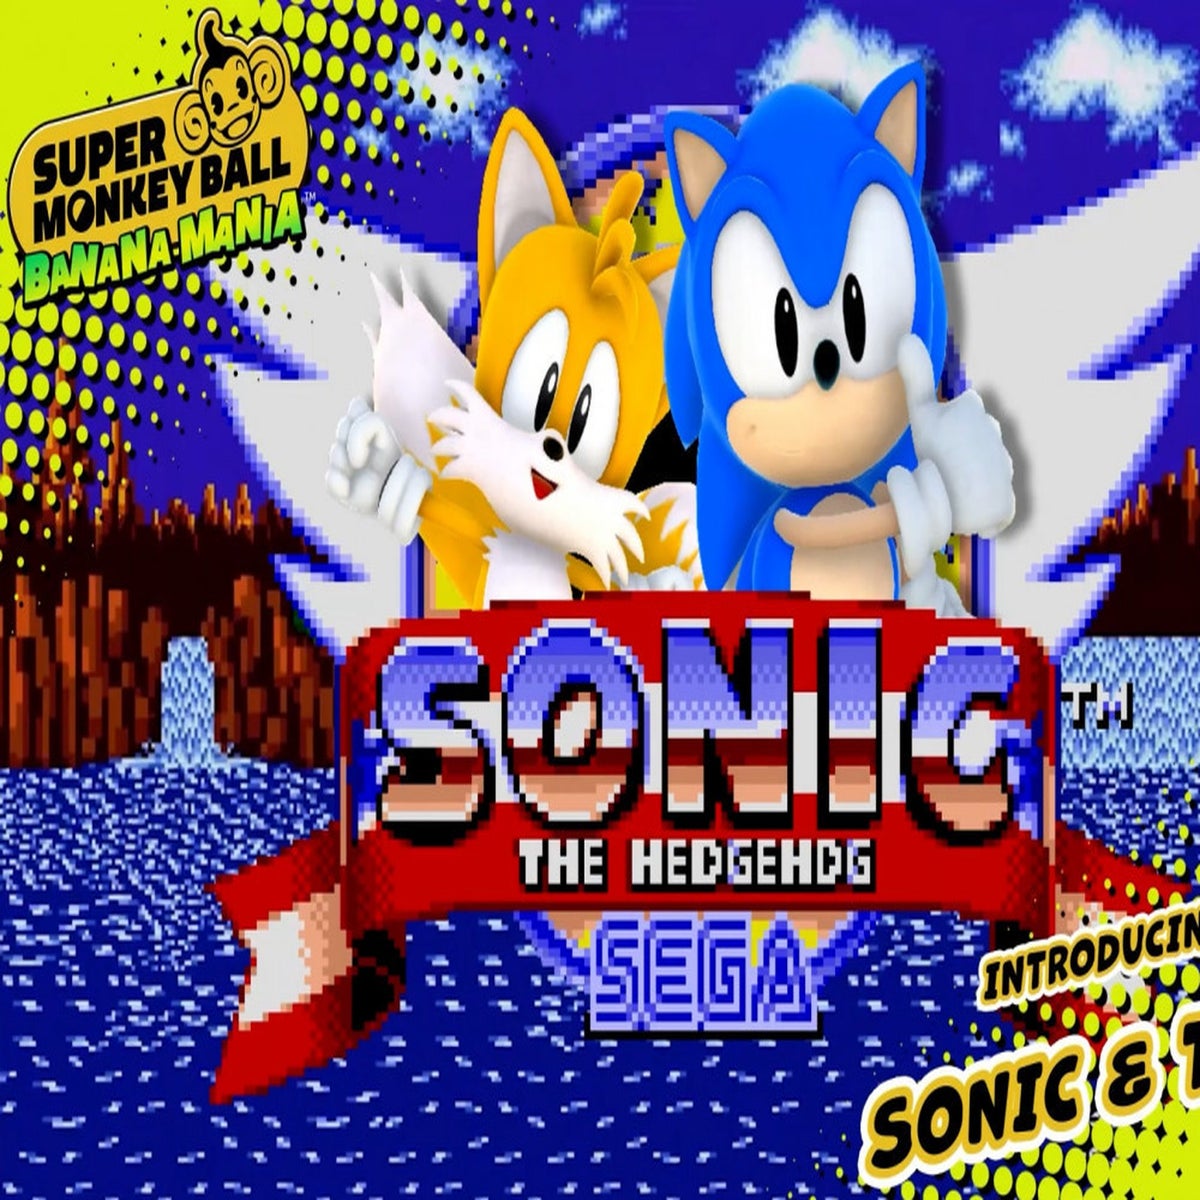 Maratona Sonic: Sonic the Hedgehog 2 (Mega Drive)